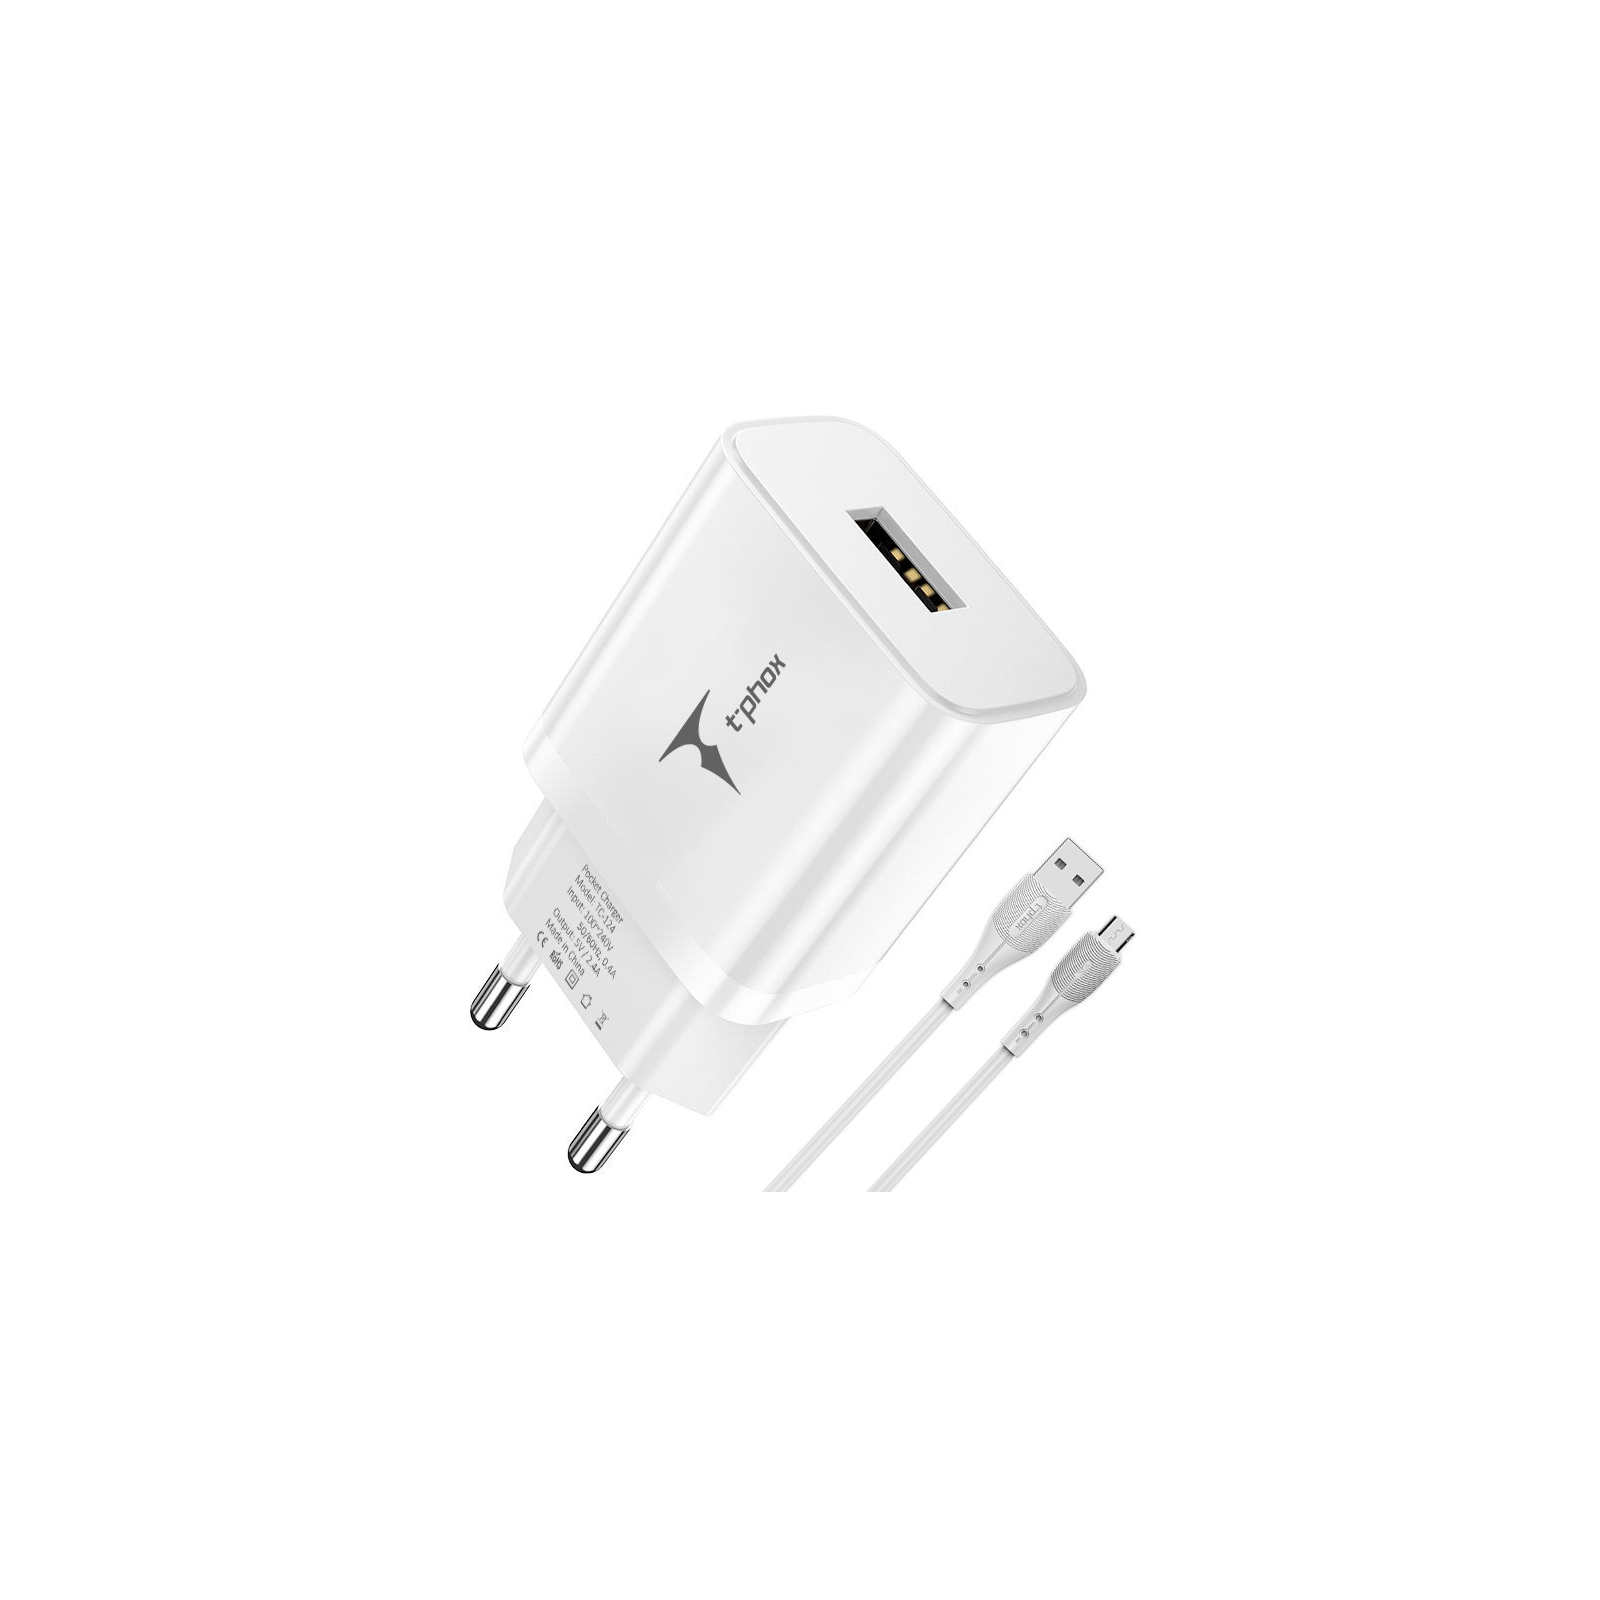 Зарядное устройство T-Phox TCC-124 Pocket USB + MicroUSB cable White (TCC-124 (W)+Micro) изображение 2